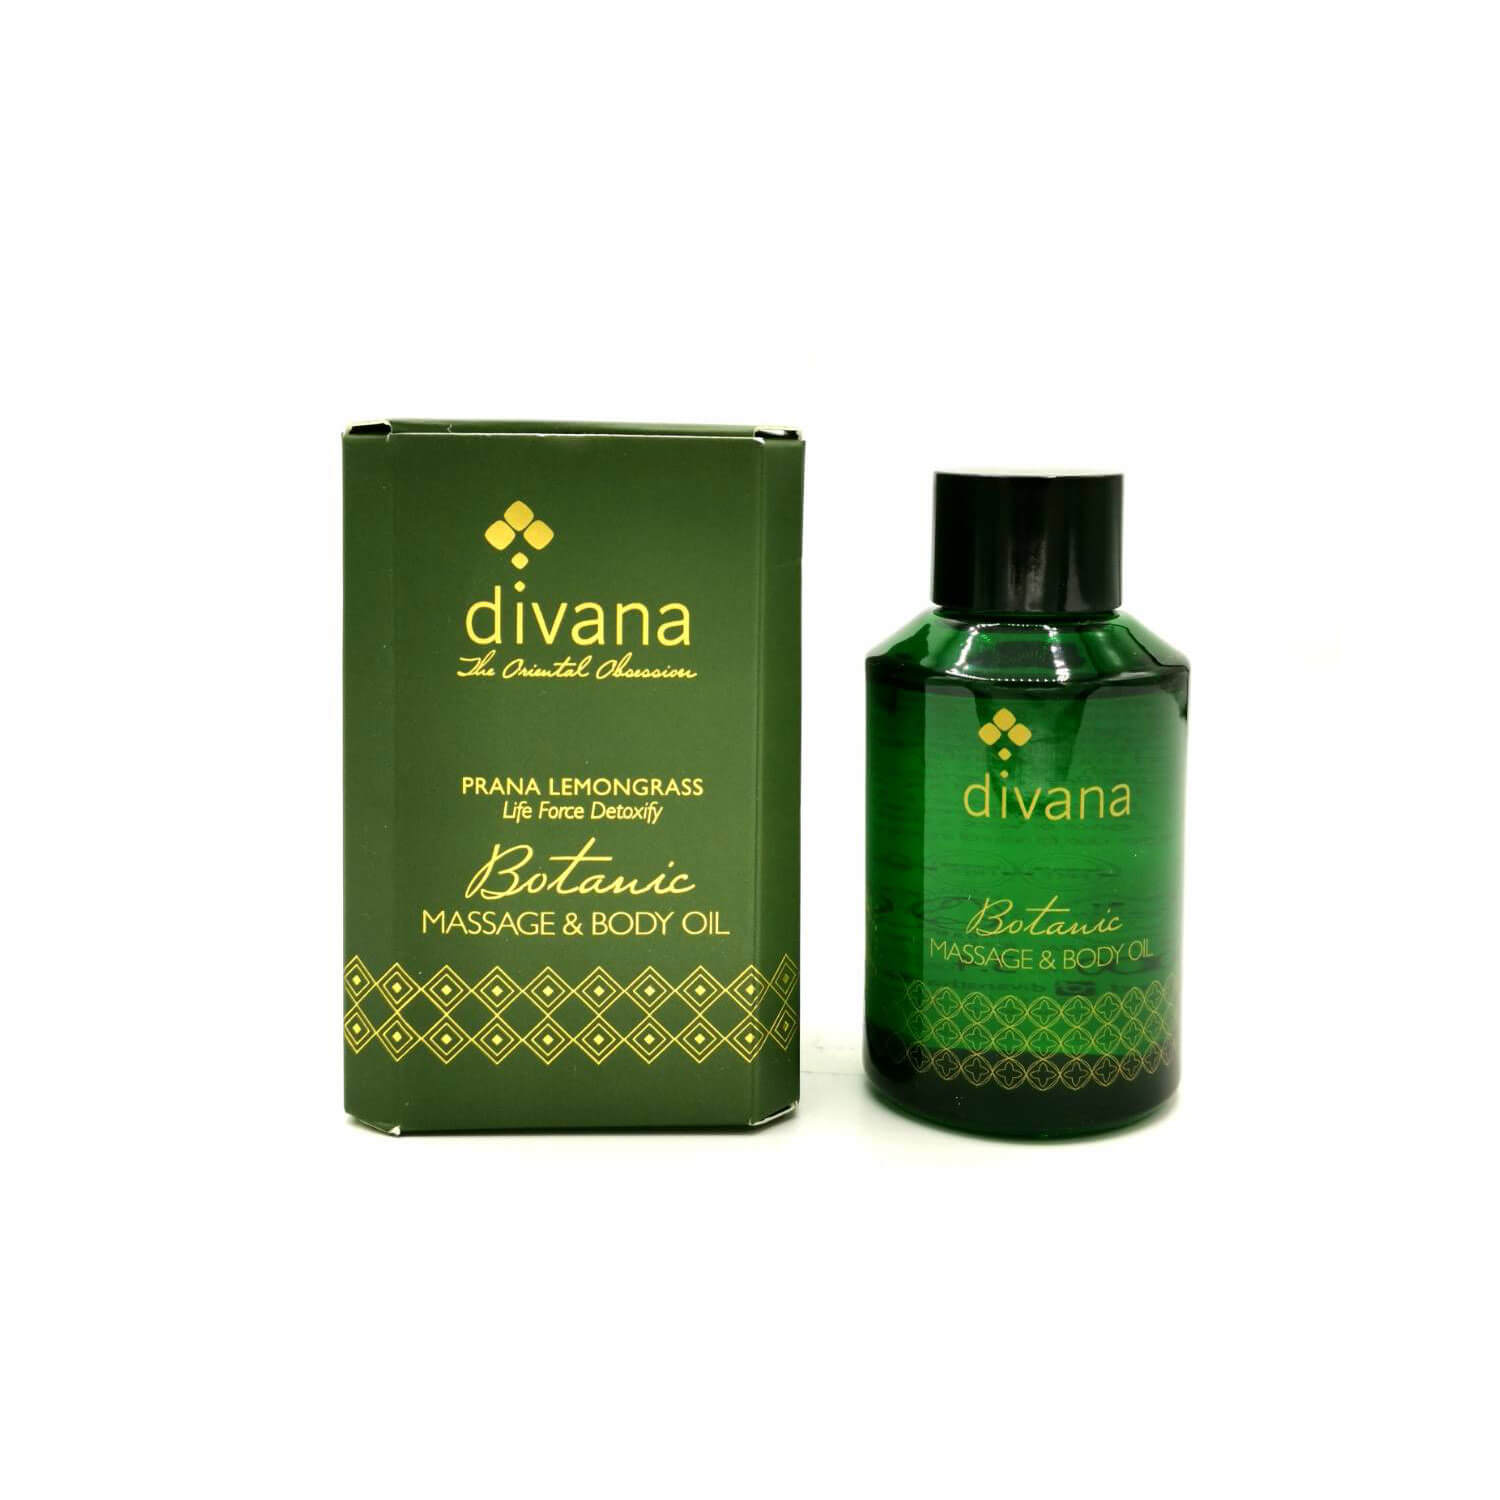 Divana Prana Lemongrass Lift Force Detoxify Botanic Massage &BodyOil 100 ml_免税价格_亿点免税